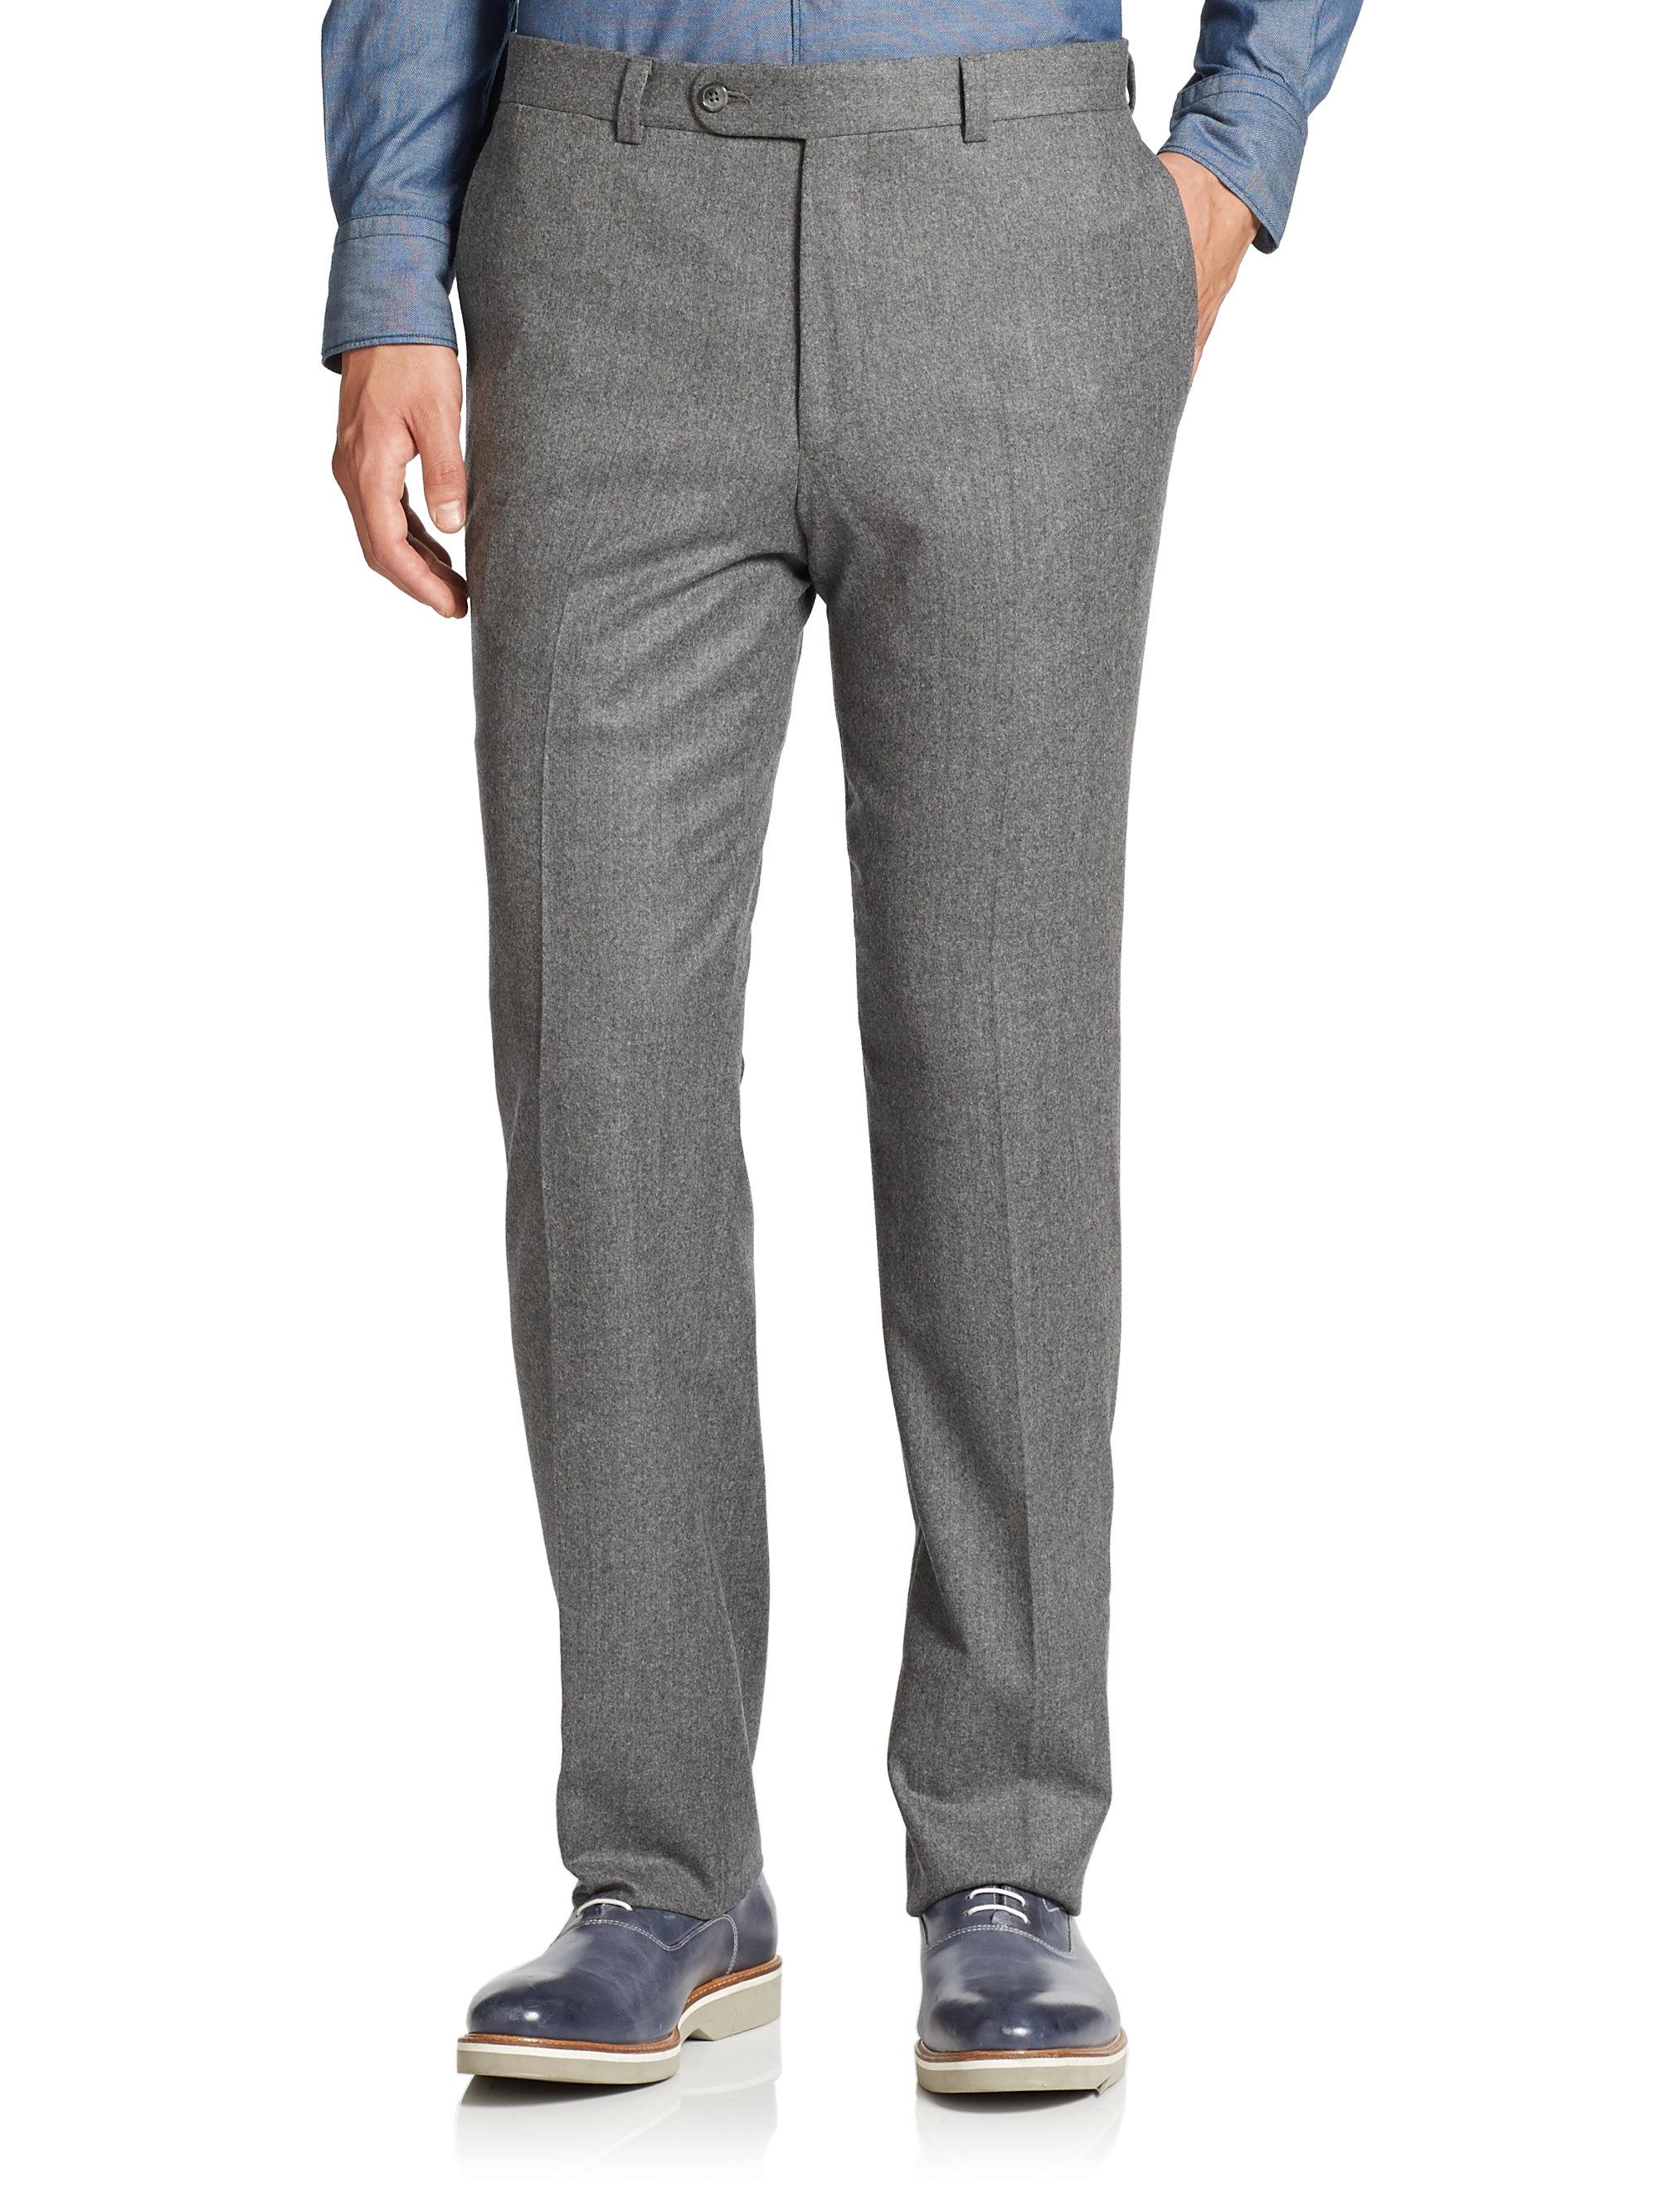 Saks Fifth Avenue Wool Flat-front Pants in Light Grey (Gray) for Men - Lyst